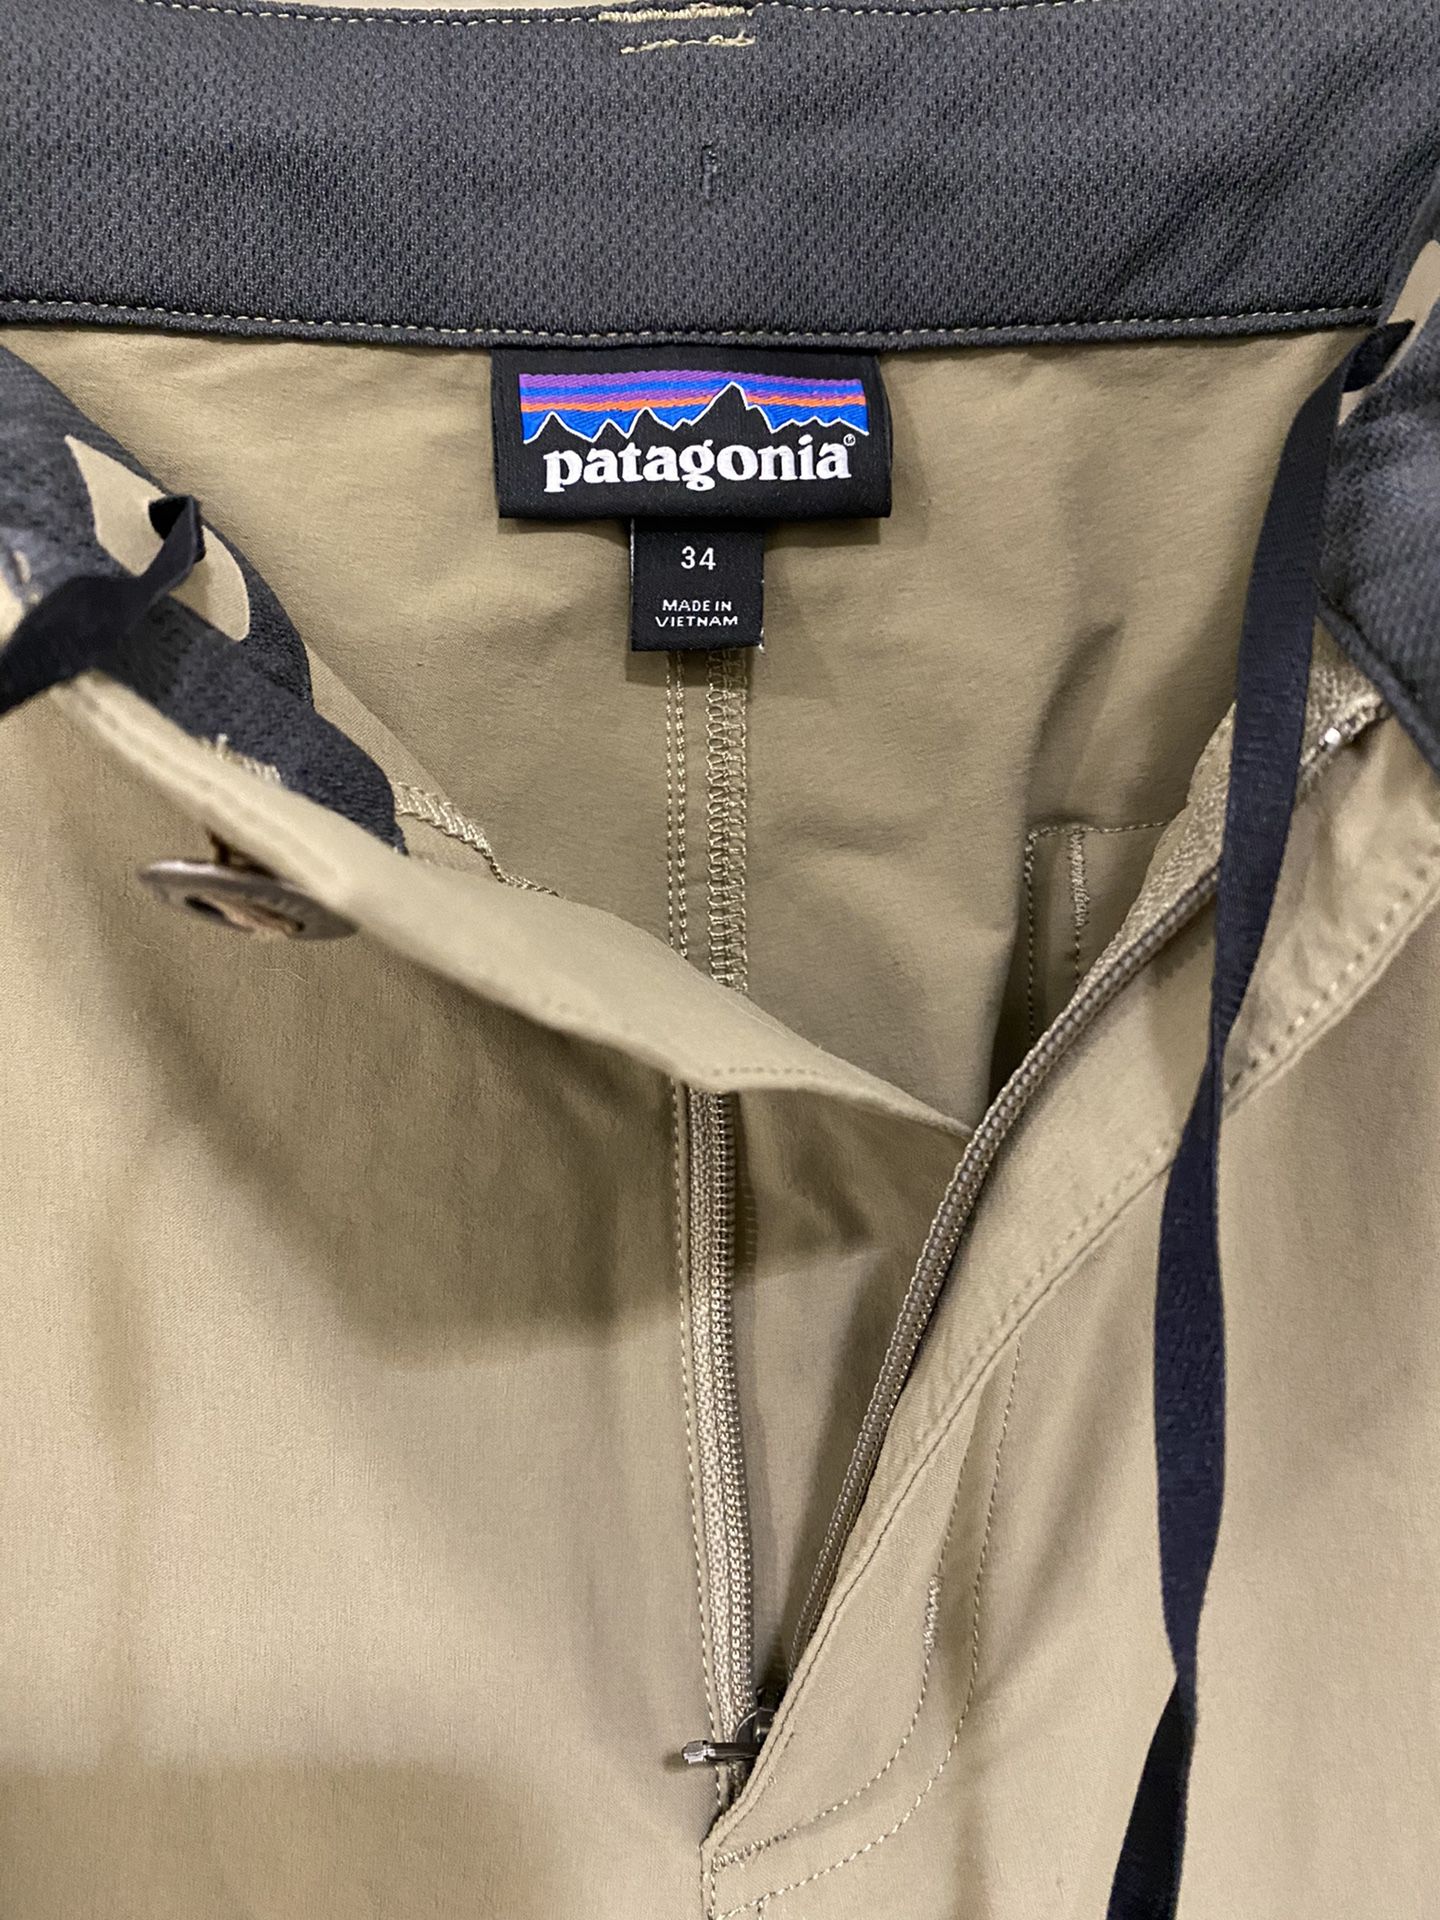 Patagonia Quandary 10” Mens Shorts Size 34